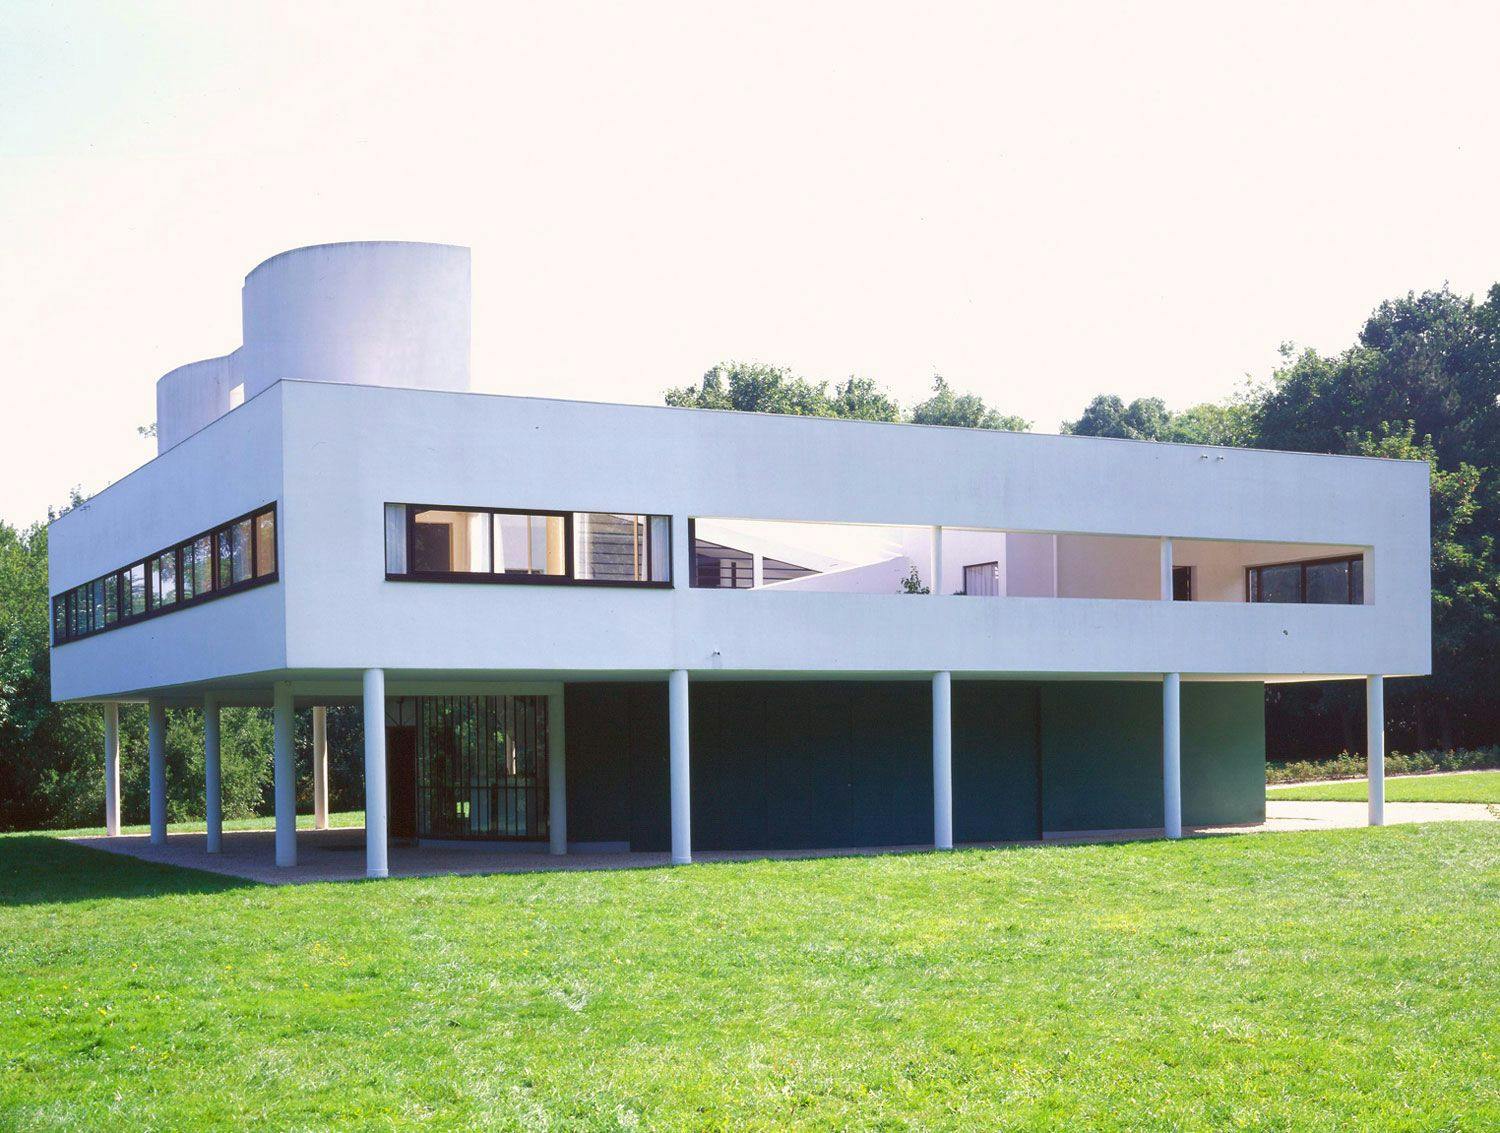  Le Corbusier, Villa Savoye, Poissy, 1929-1930 Image: Ralph Lieberman 